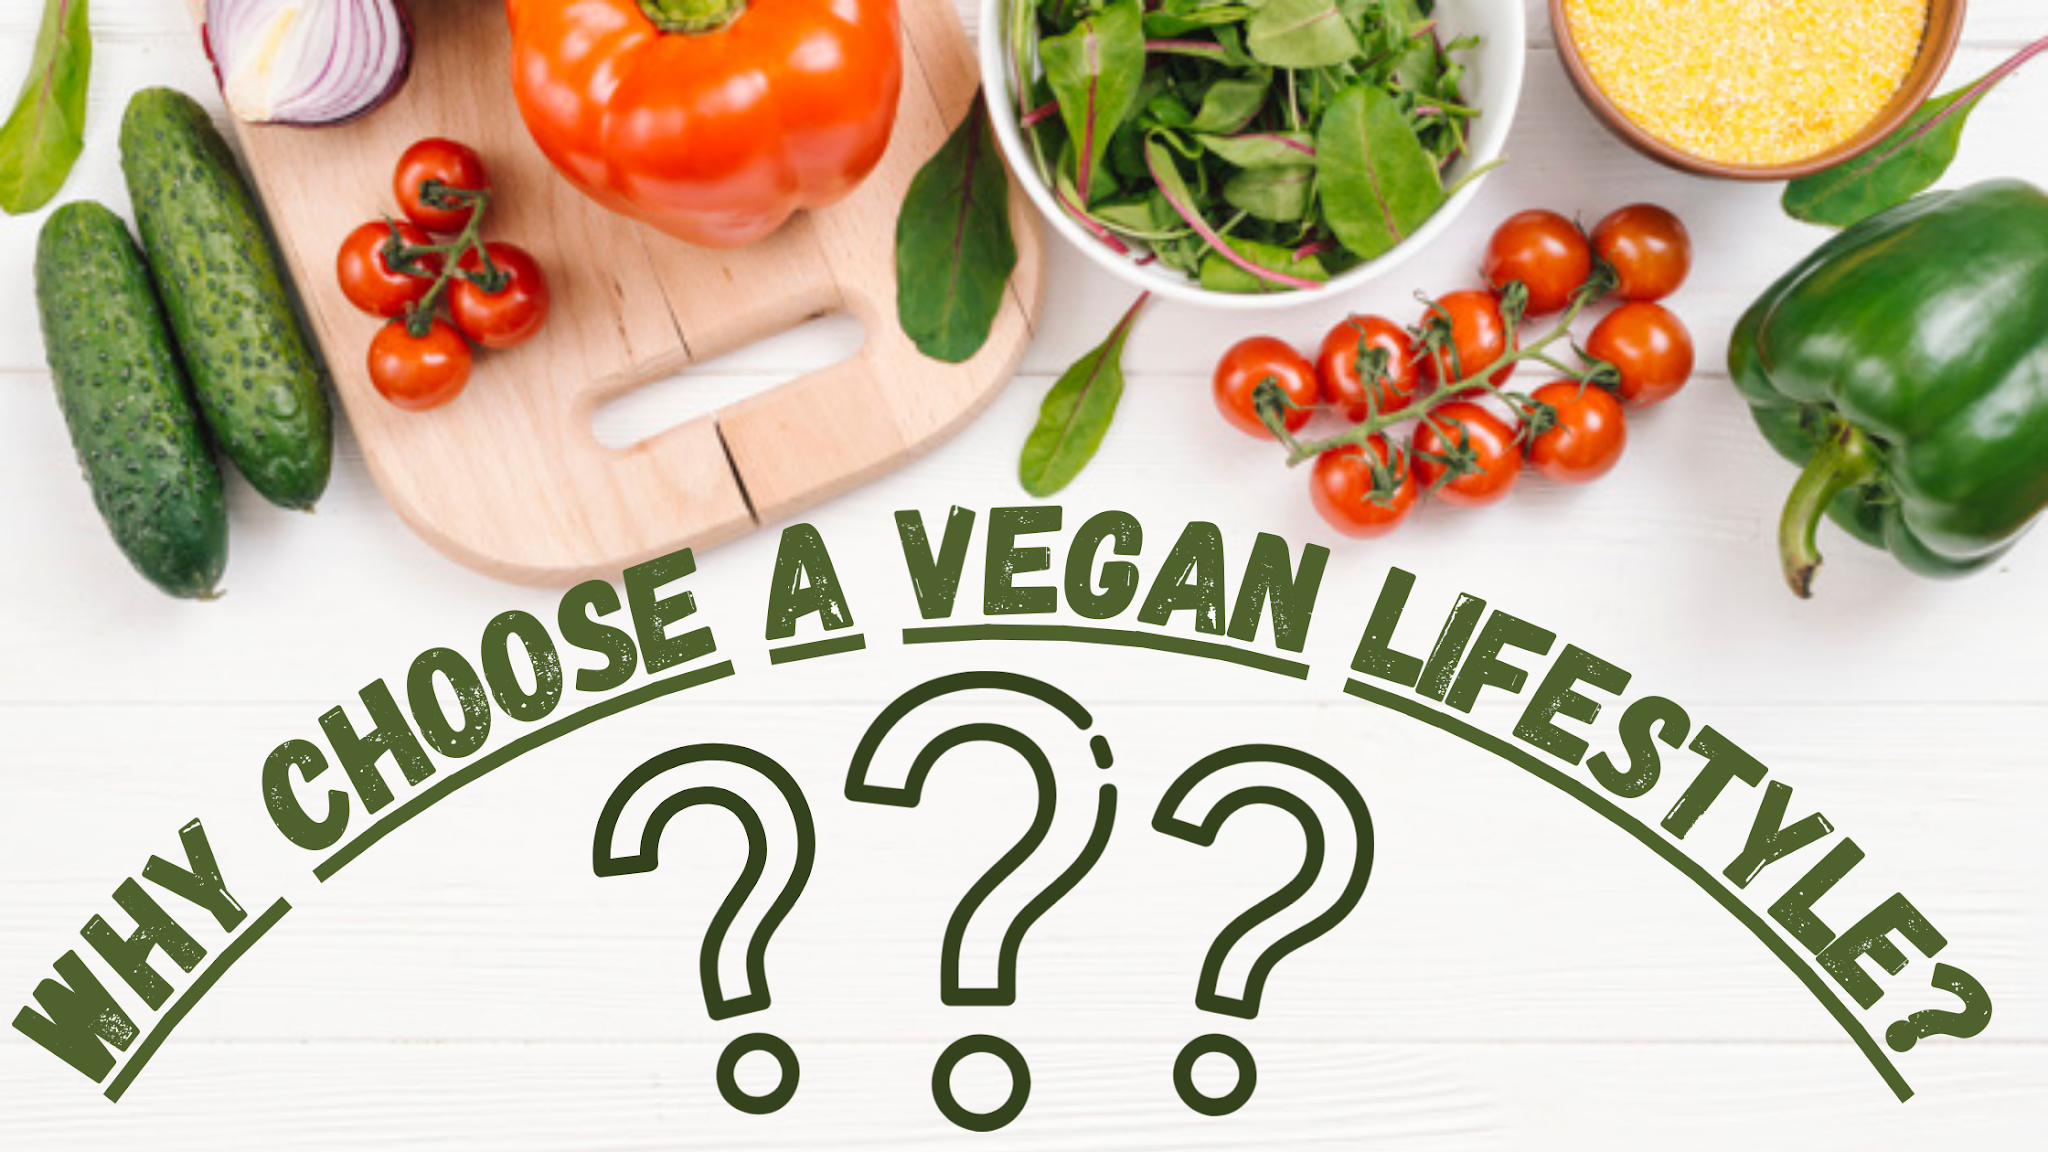 Why Choose A Vegan Lifestyle